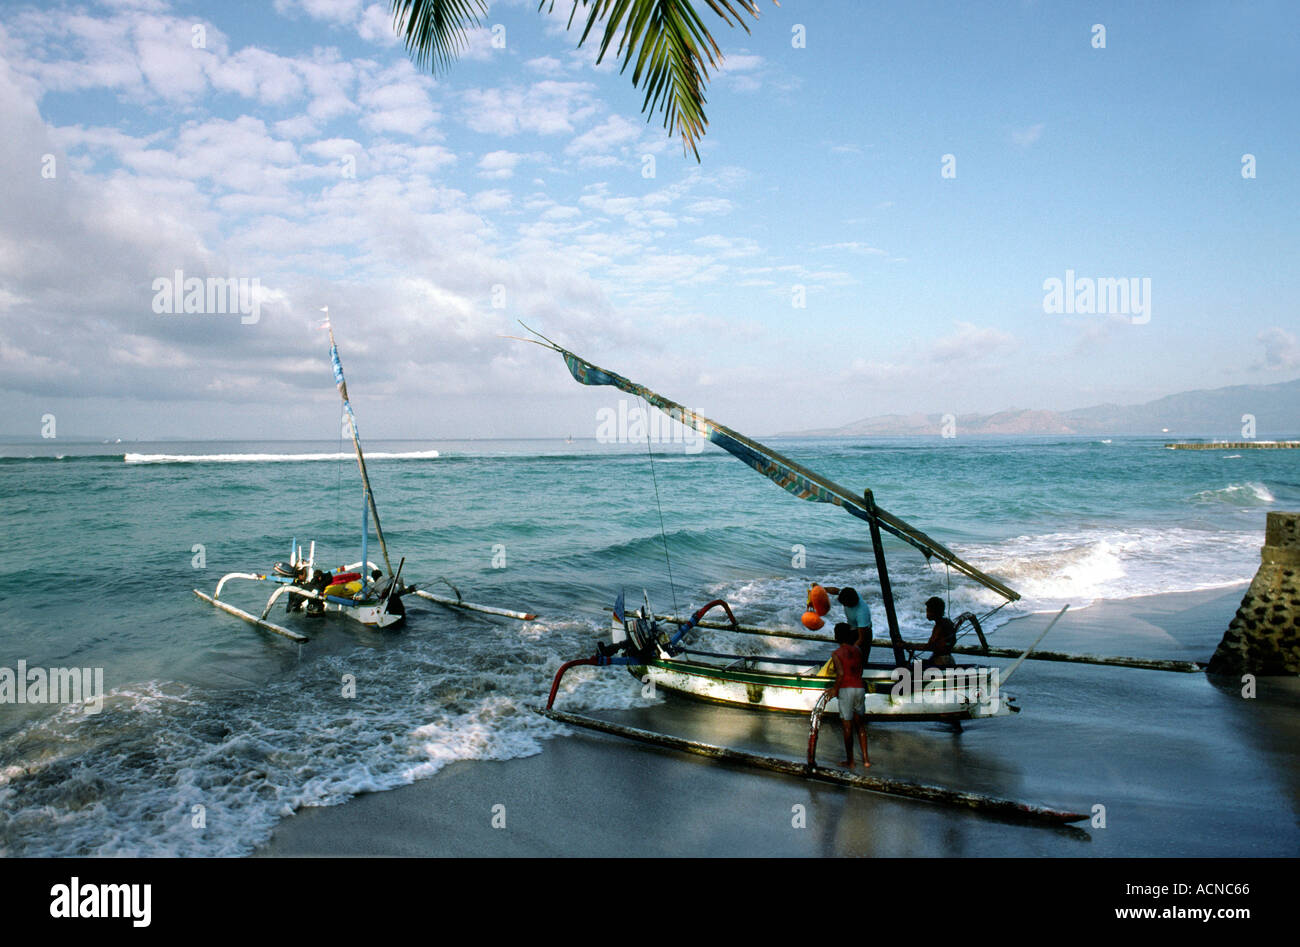 Indonesia Bali Candi Dasa launching fishing boats from beach Stock Photo